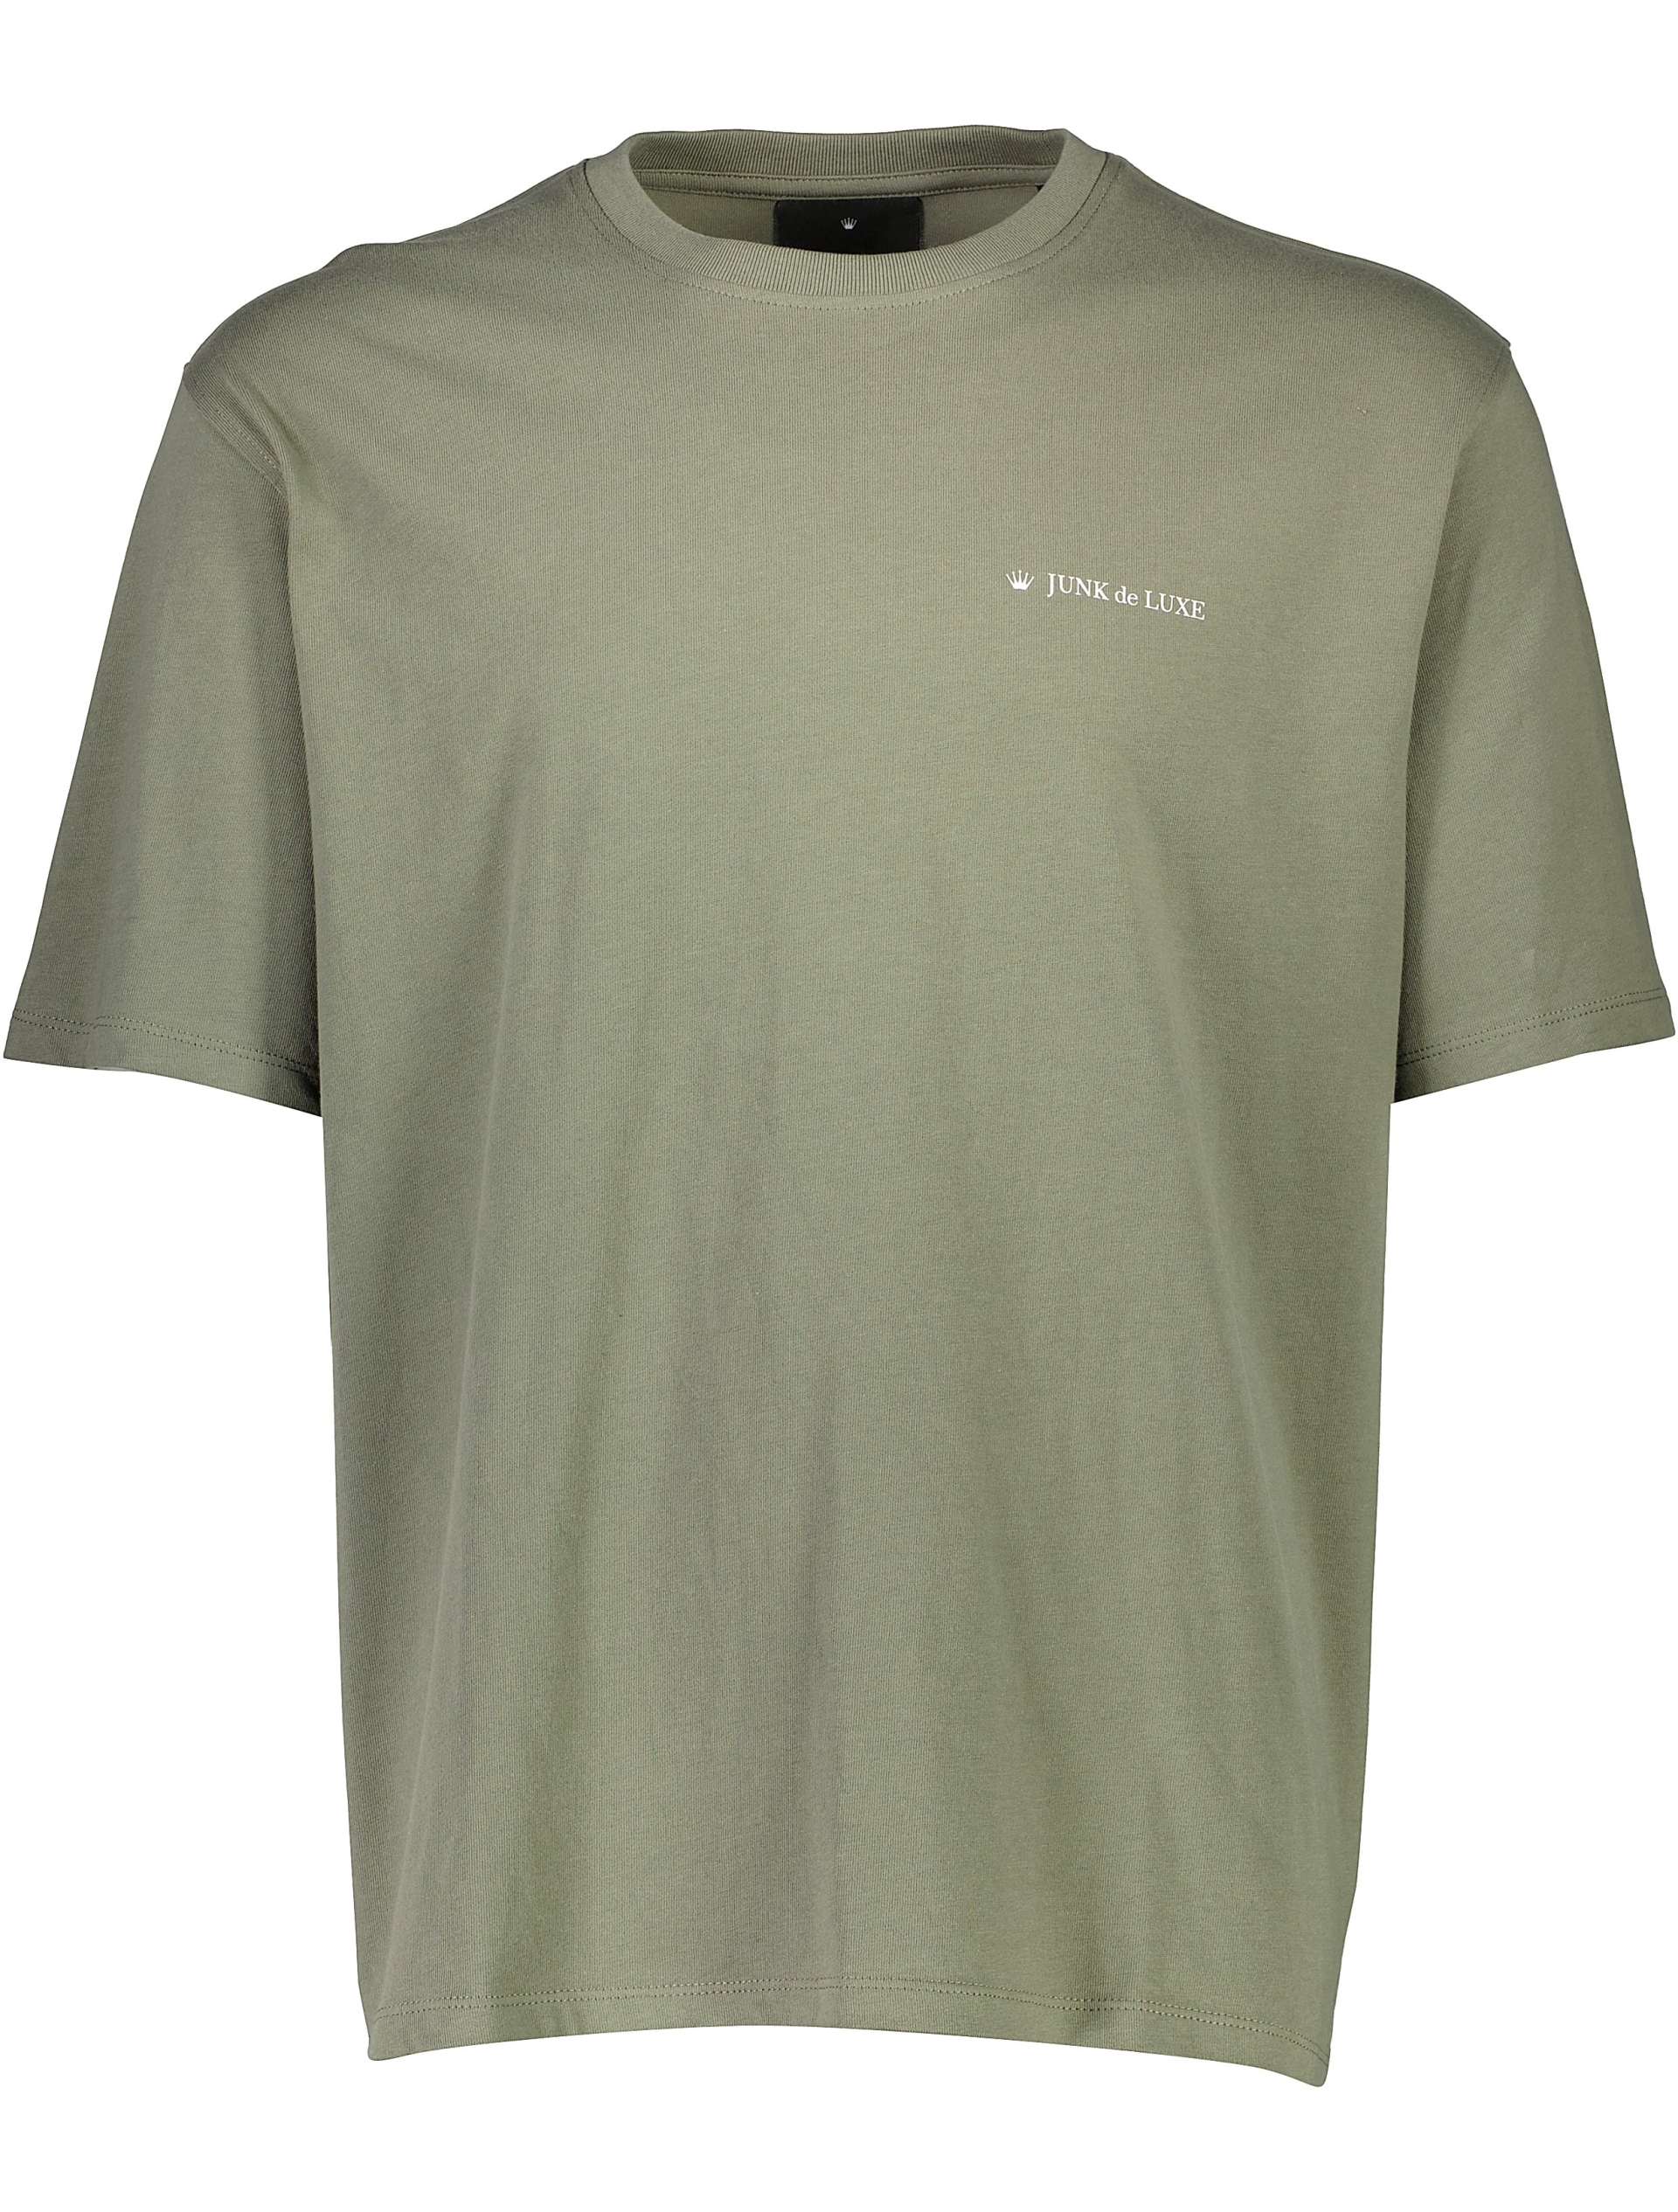 Junk de Luxe T-shirt grön / lt dusty army